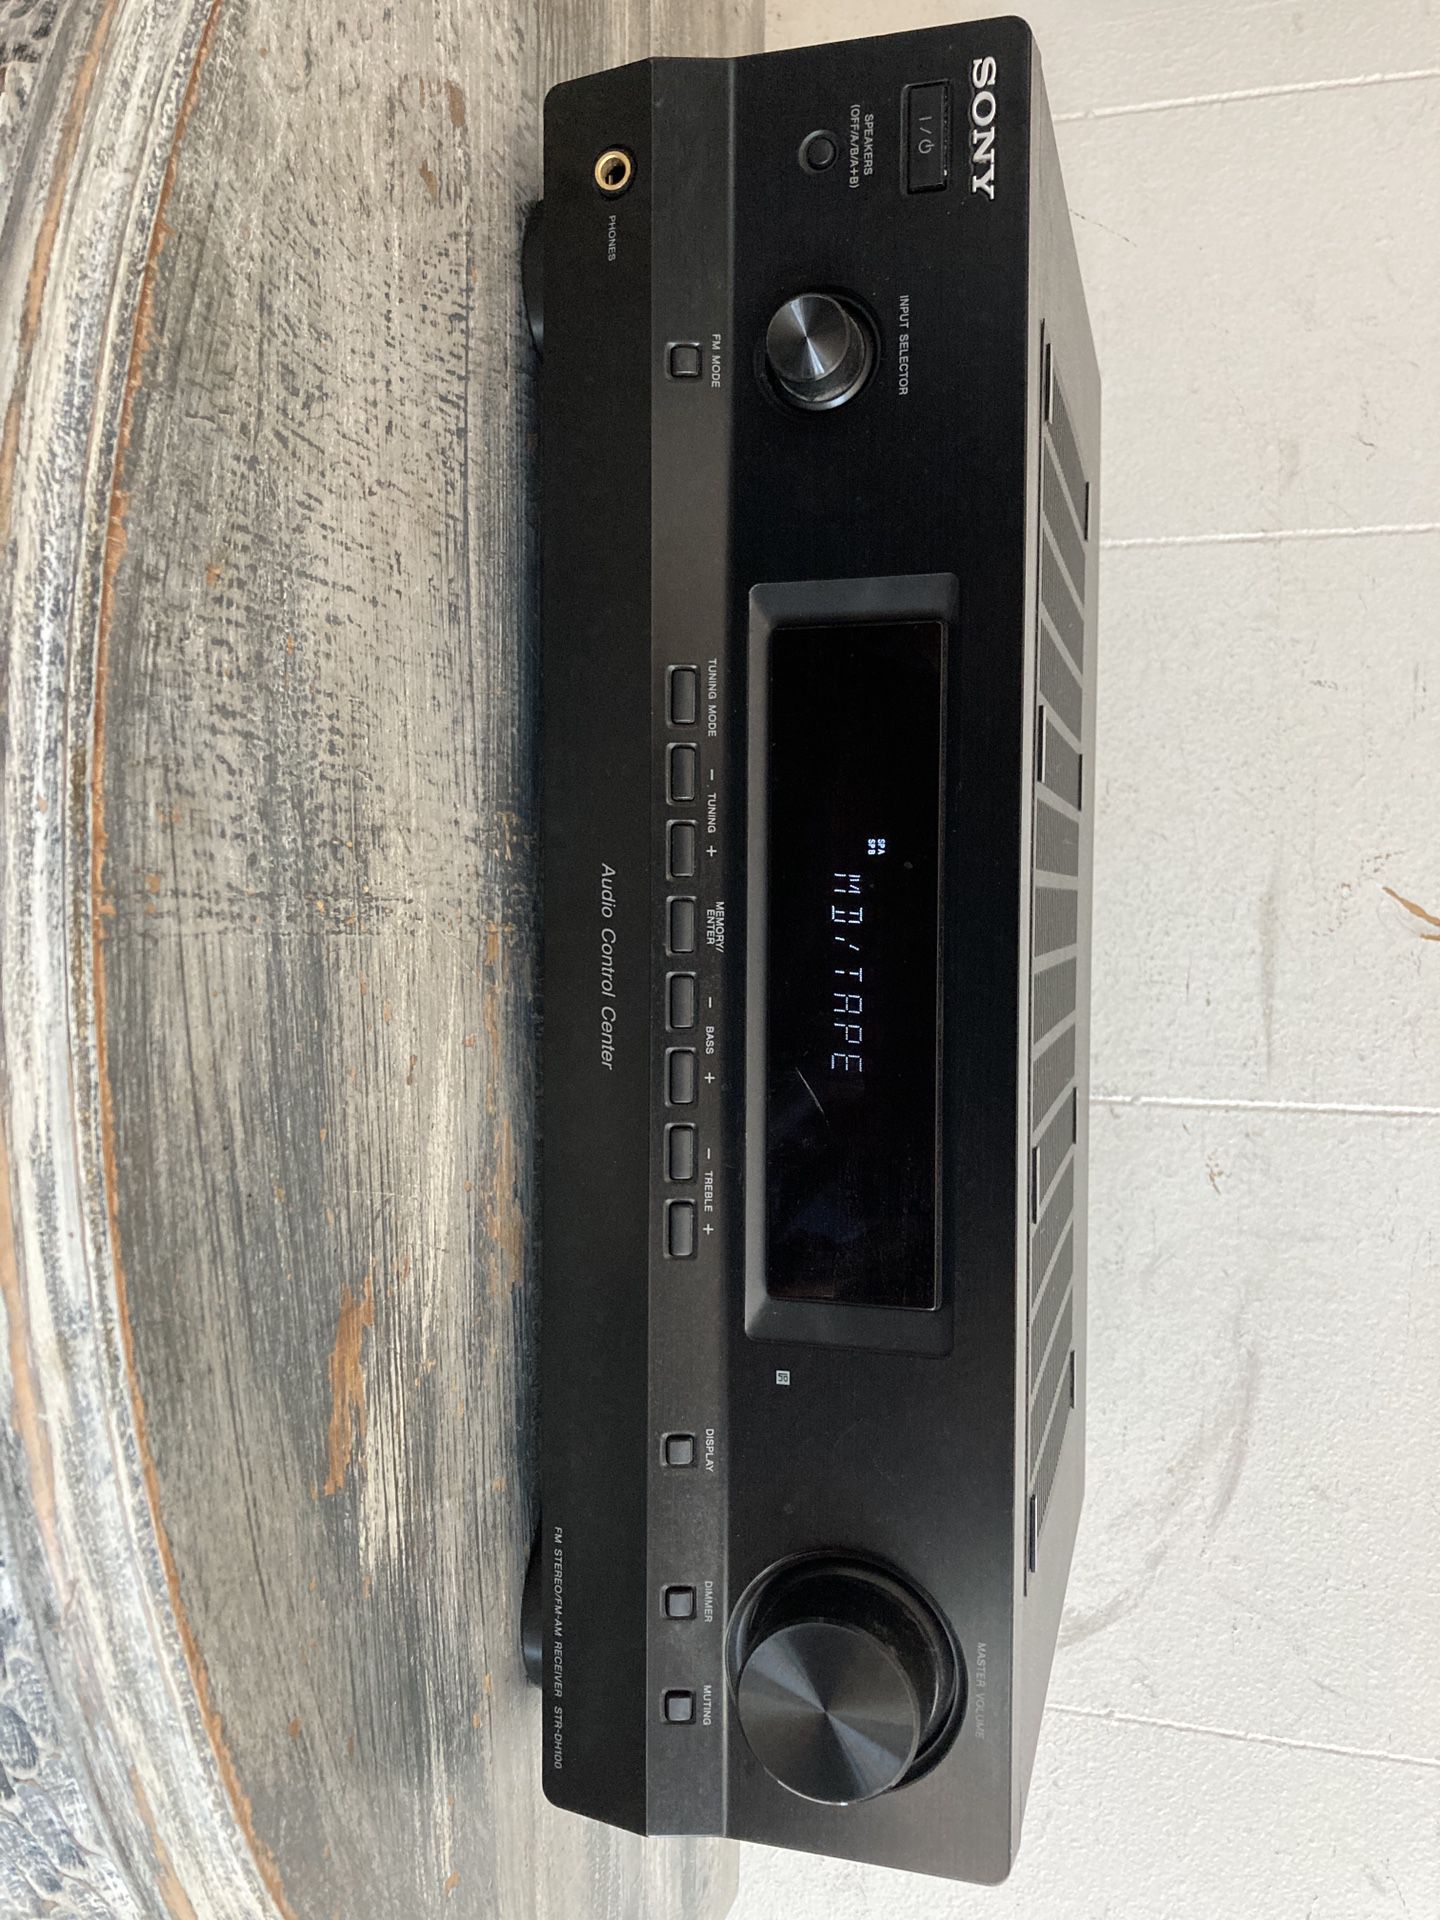 Sony STR-DH100 AM/FM Stereo Receiver